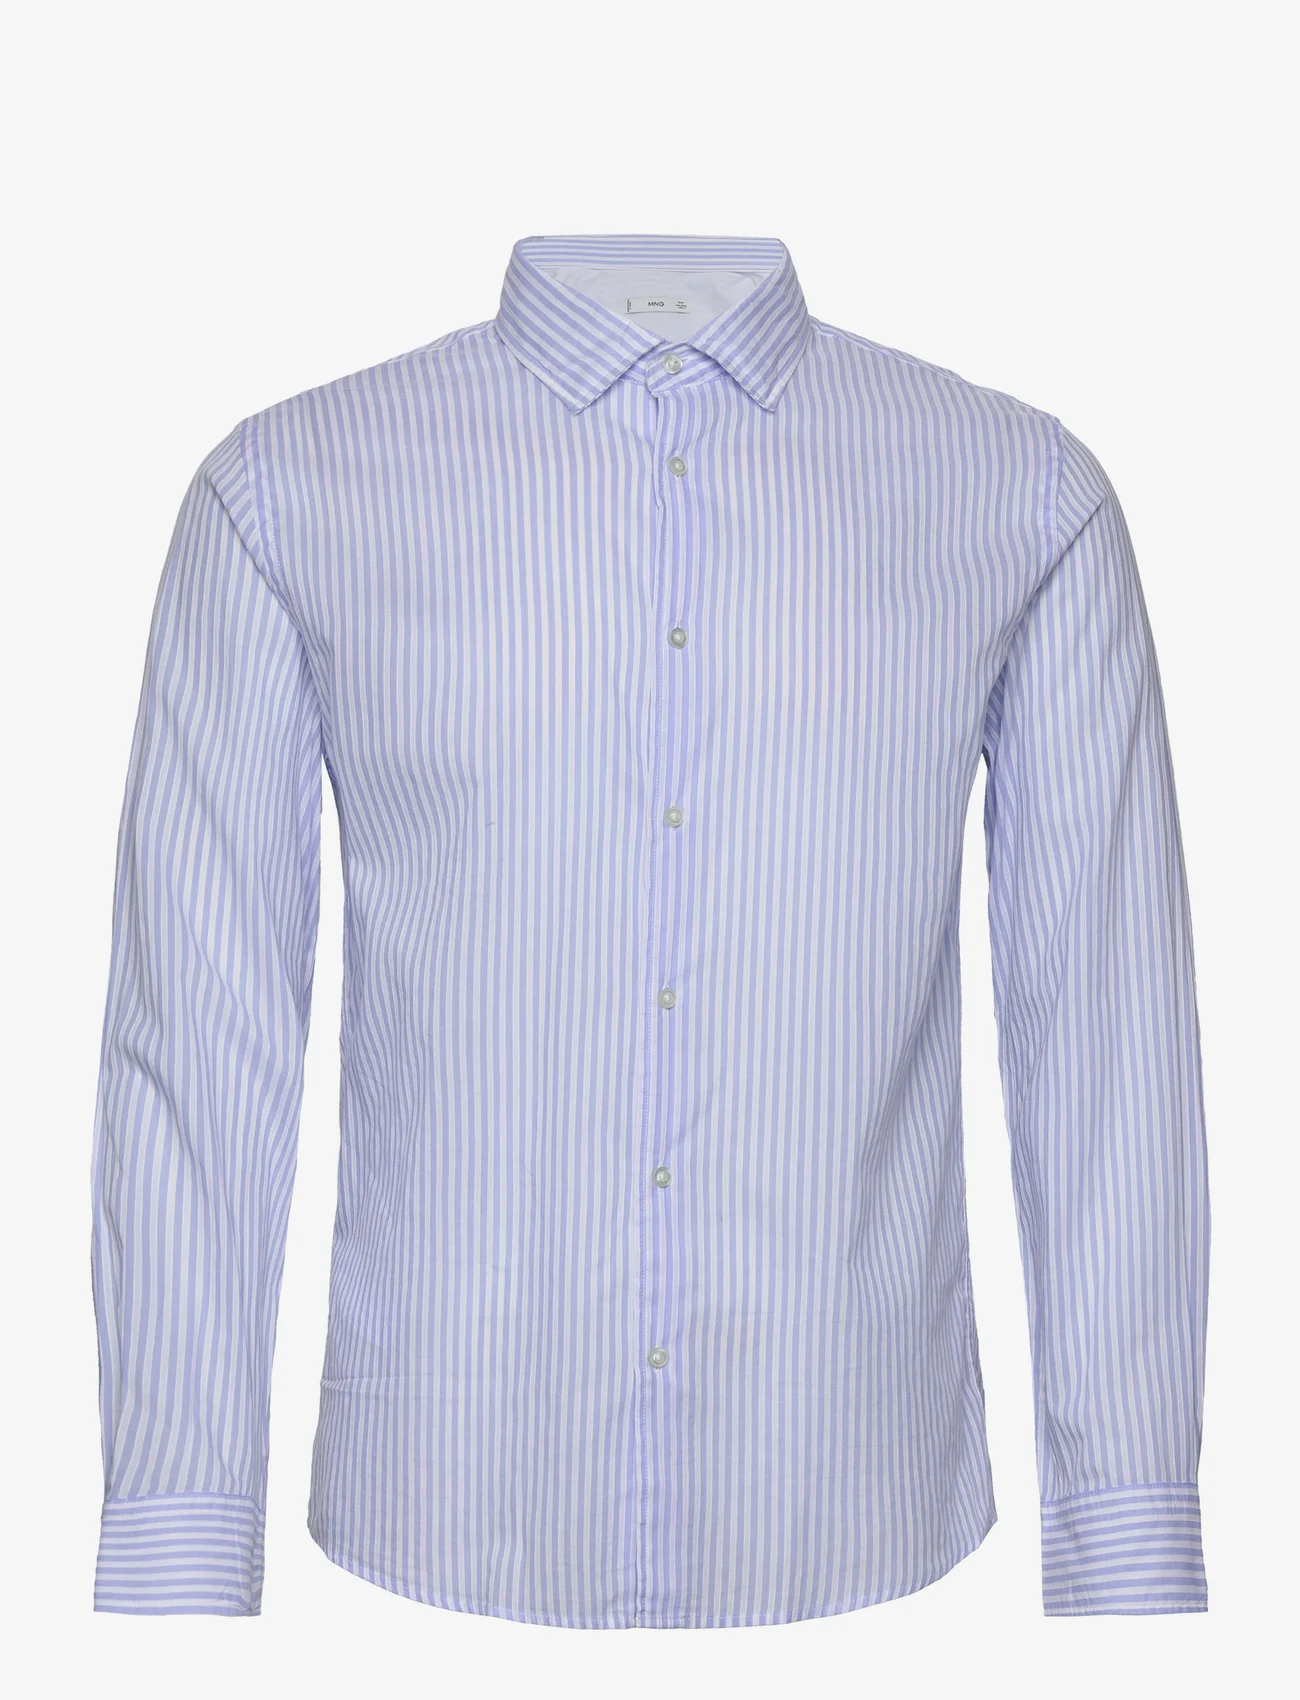 Mango - 100% cotton slim fit shirt - business skjortor - lt-pastel blue - 0